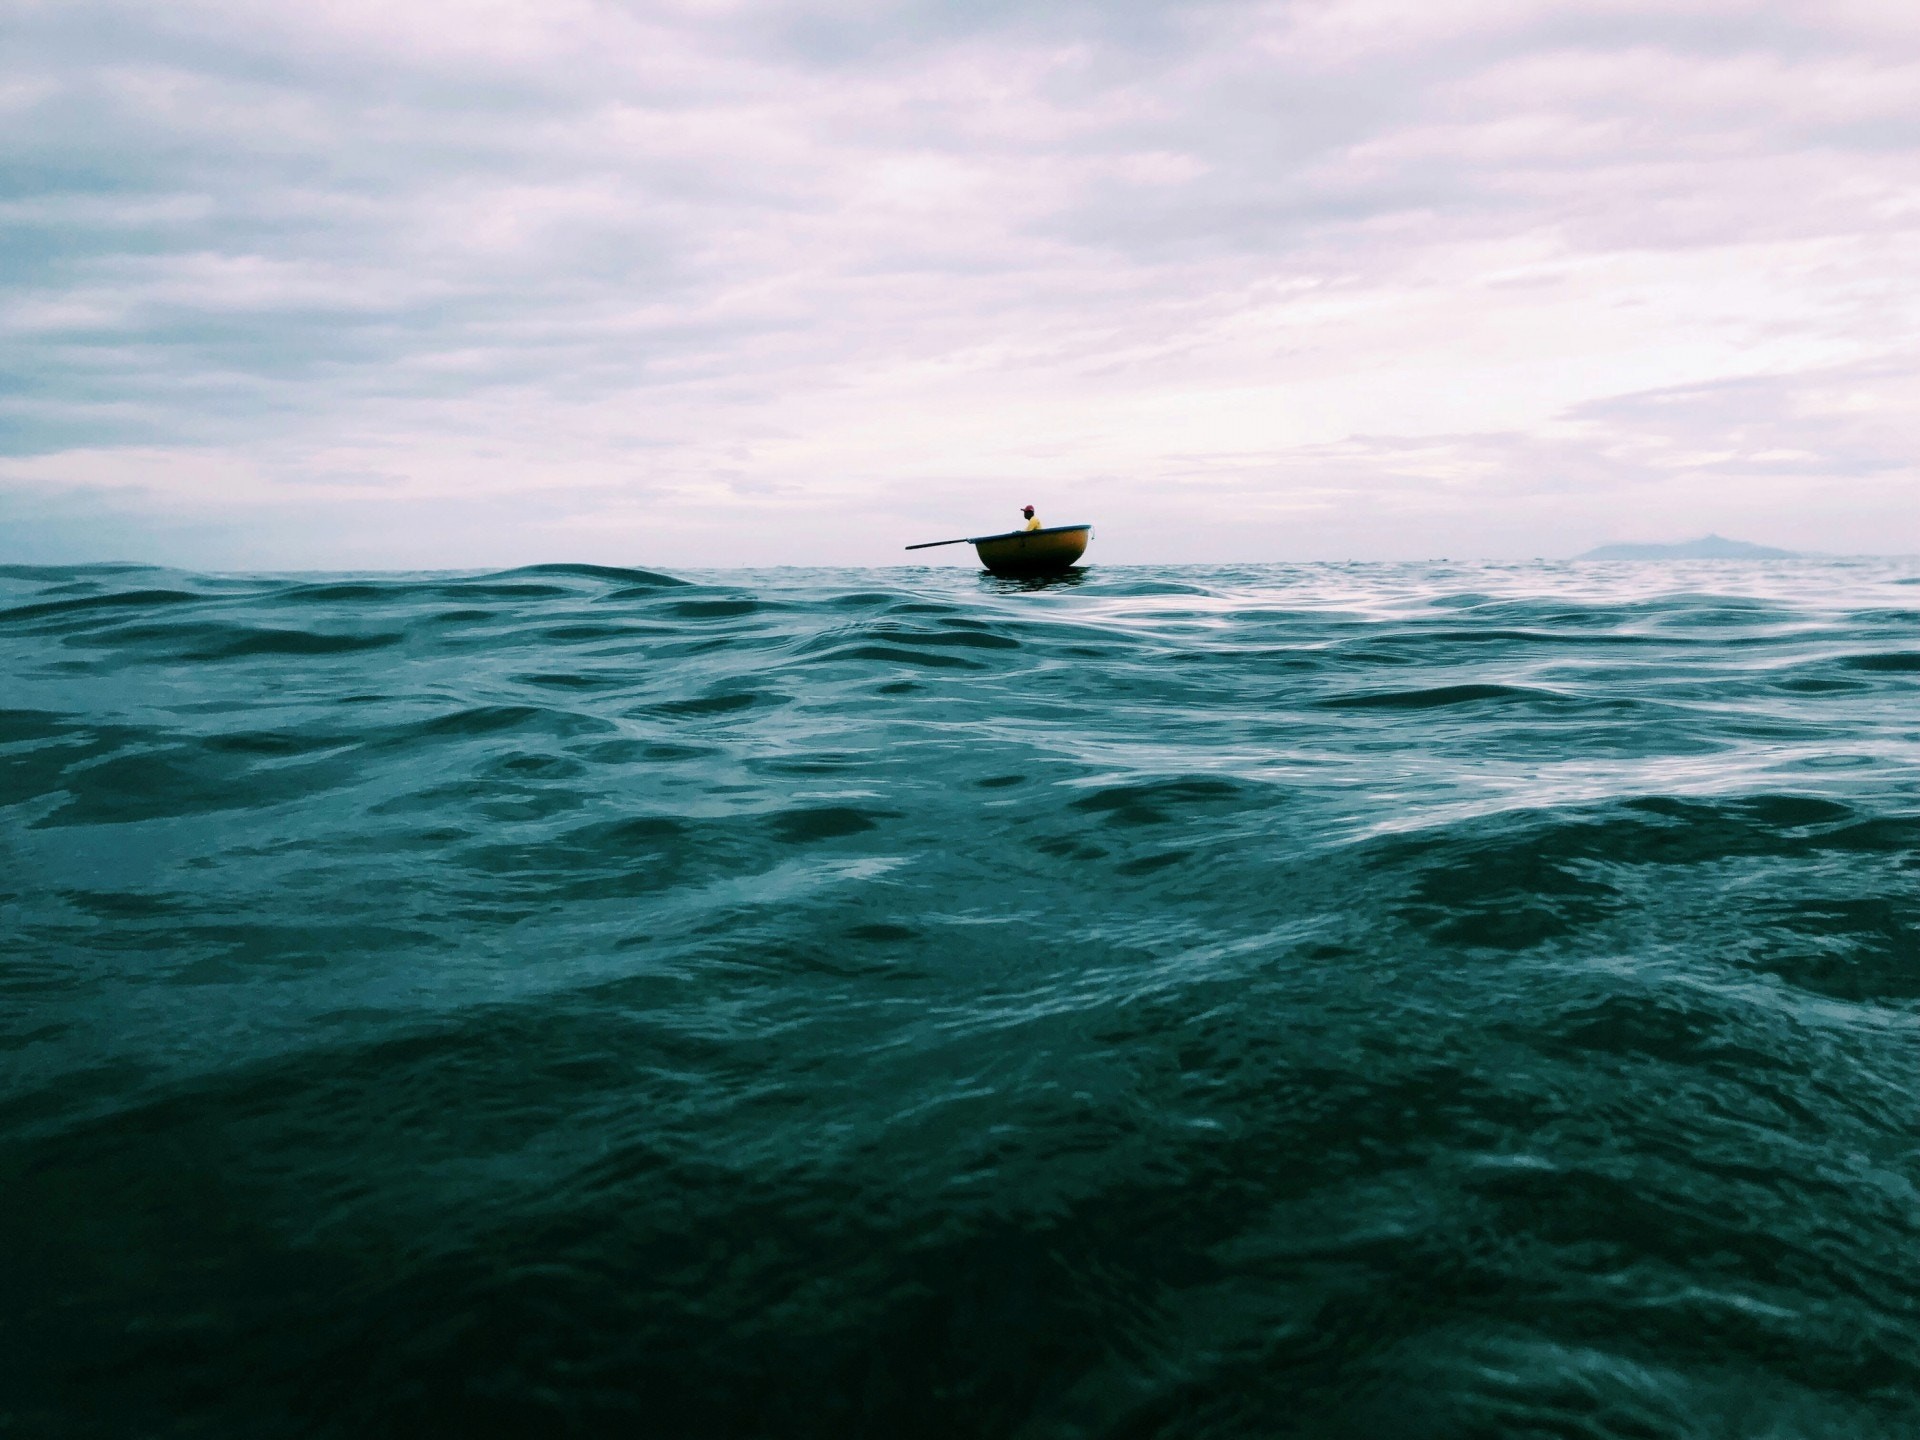 1 место в категории Путешествия, 2019. Одинокая лодка. Автор Лиу Бо